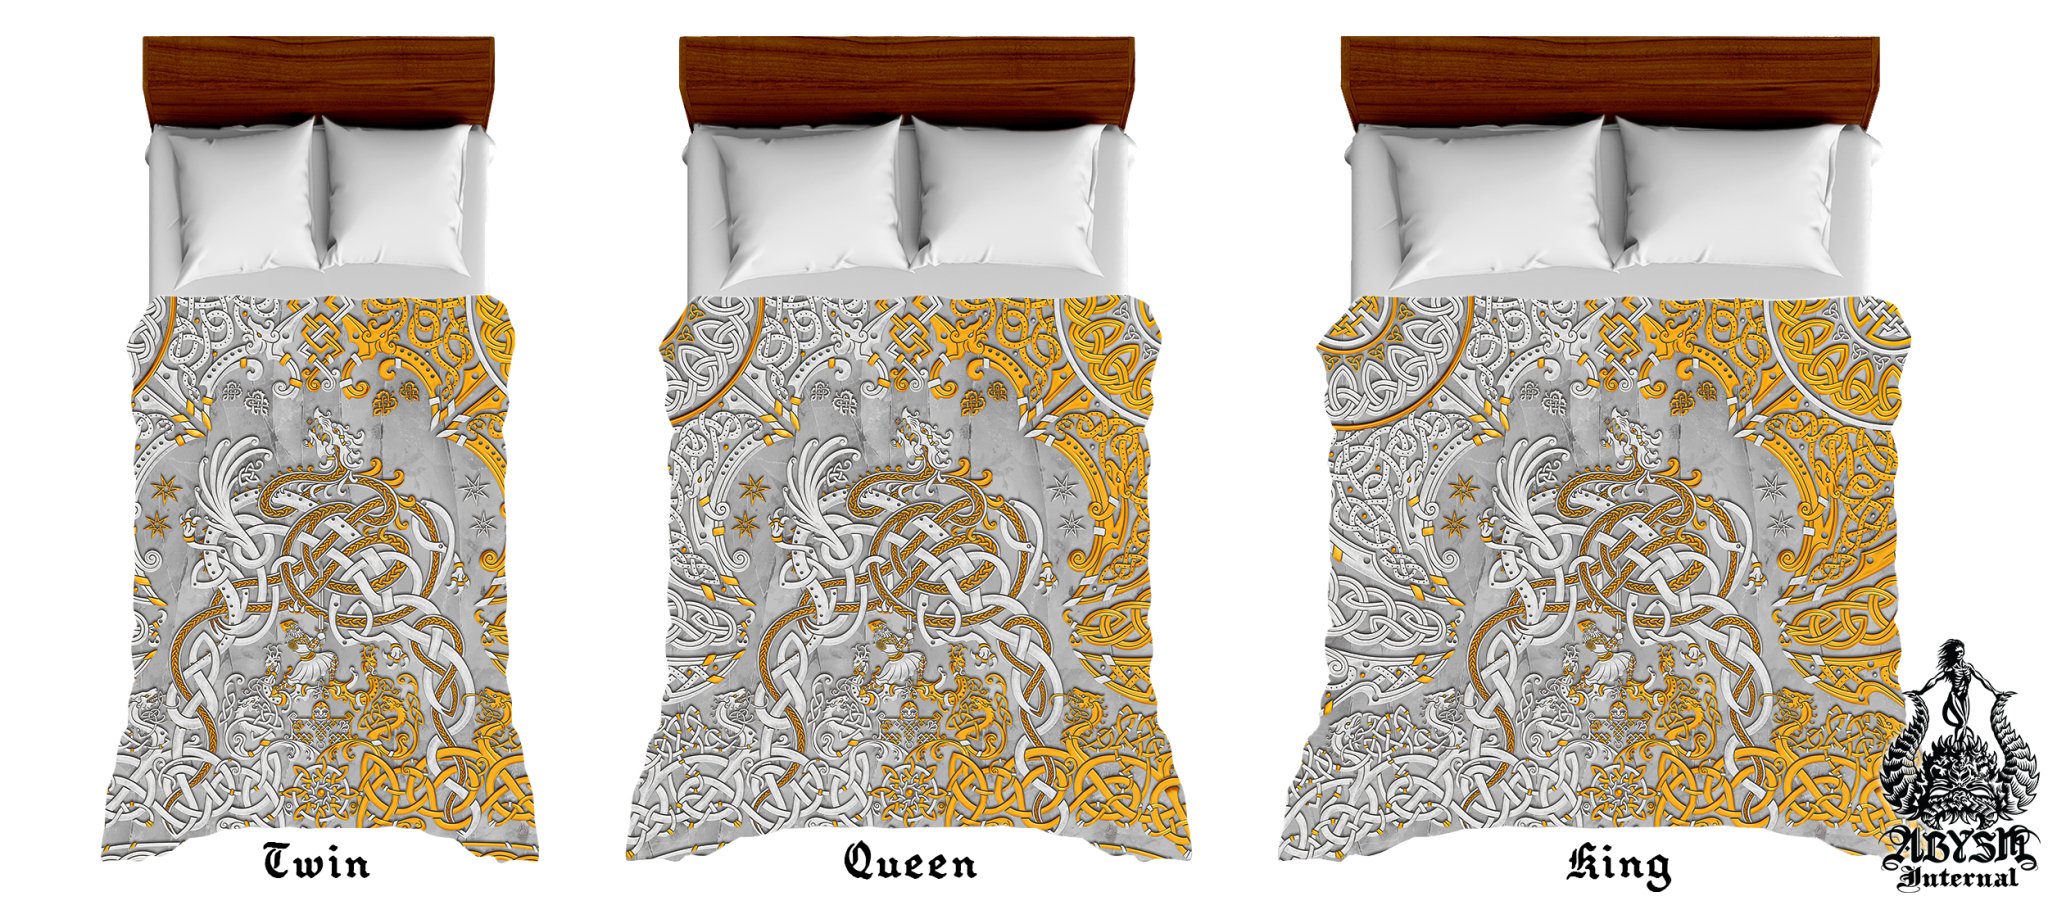 Viking Duvet Cover, Bed Covering, Norse Comforter, Bedroom Decor, Nordic Art, Sigurd kills Dragon Fafnir, King, Queen & Twin Bedding Set - Stone White & Gold, 2 Colors - Abysm Internal